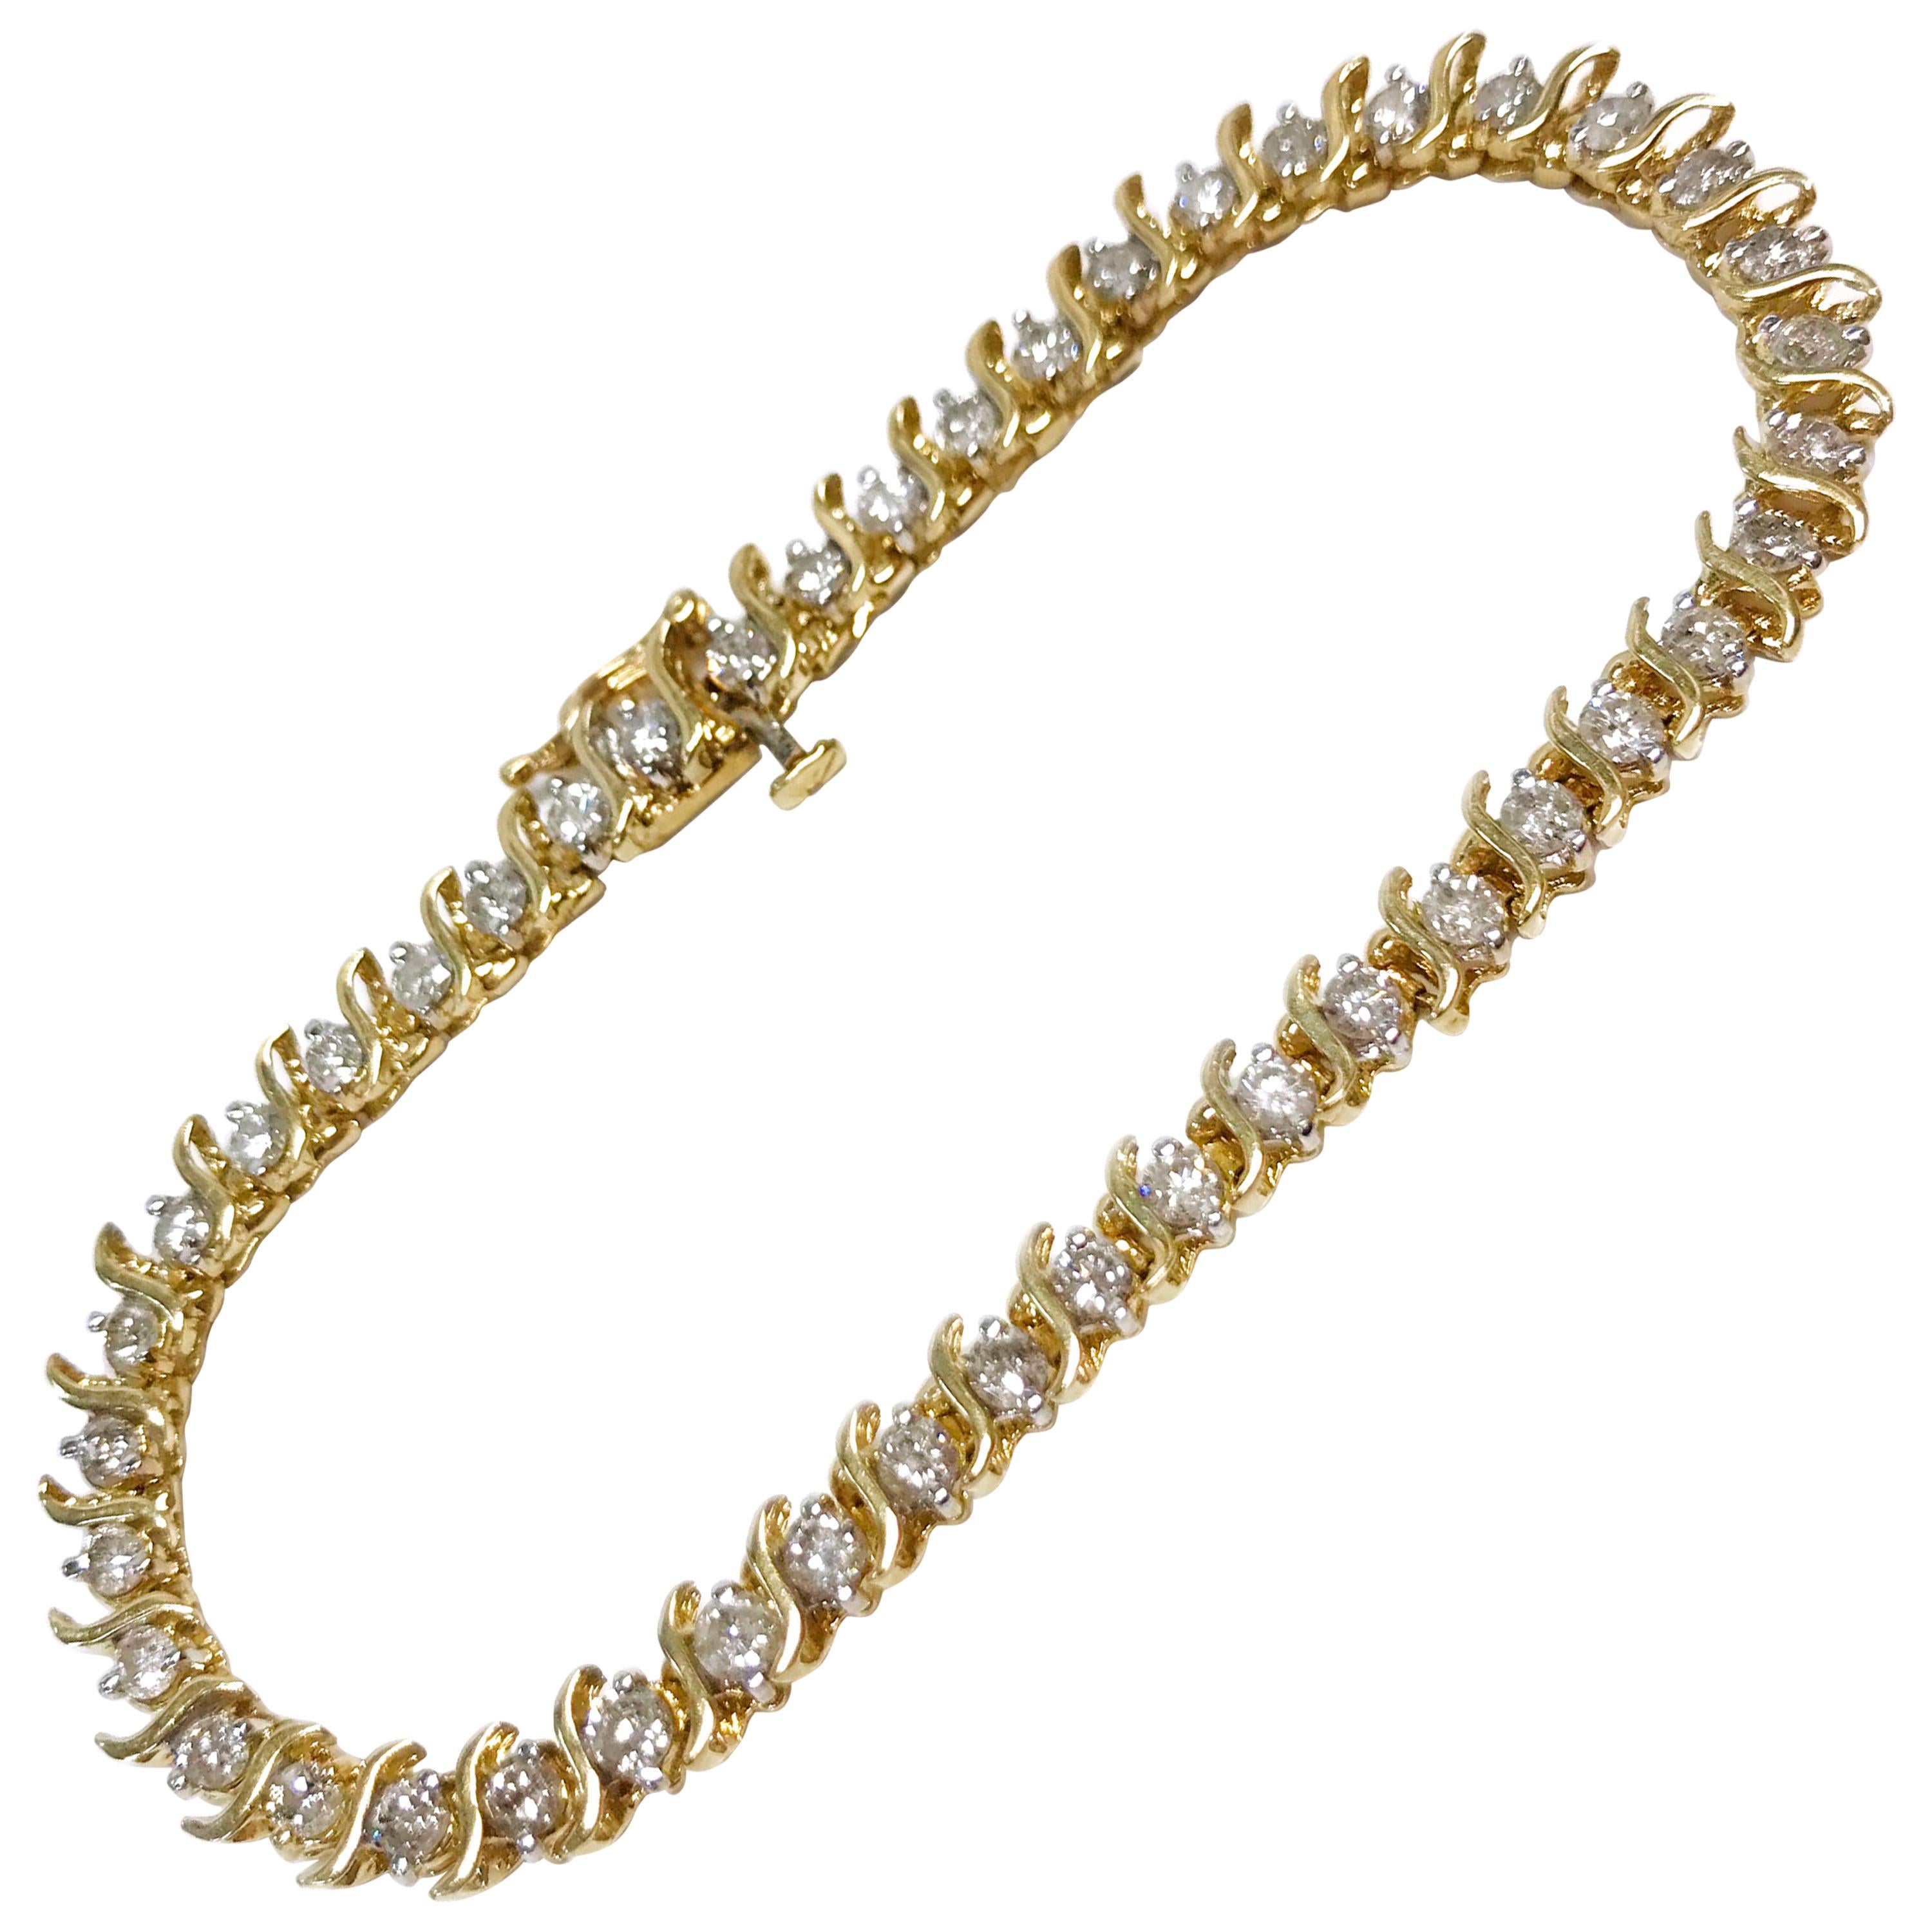 14 Karat Yellow Gold Diamond Tennis Bracelet